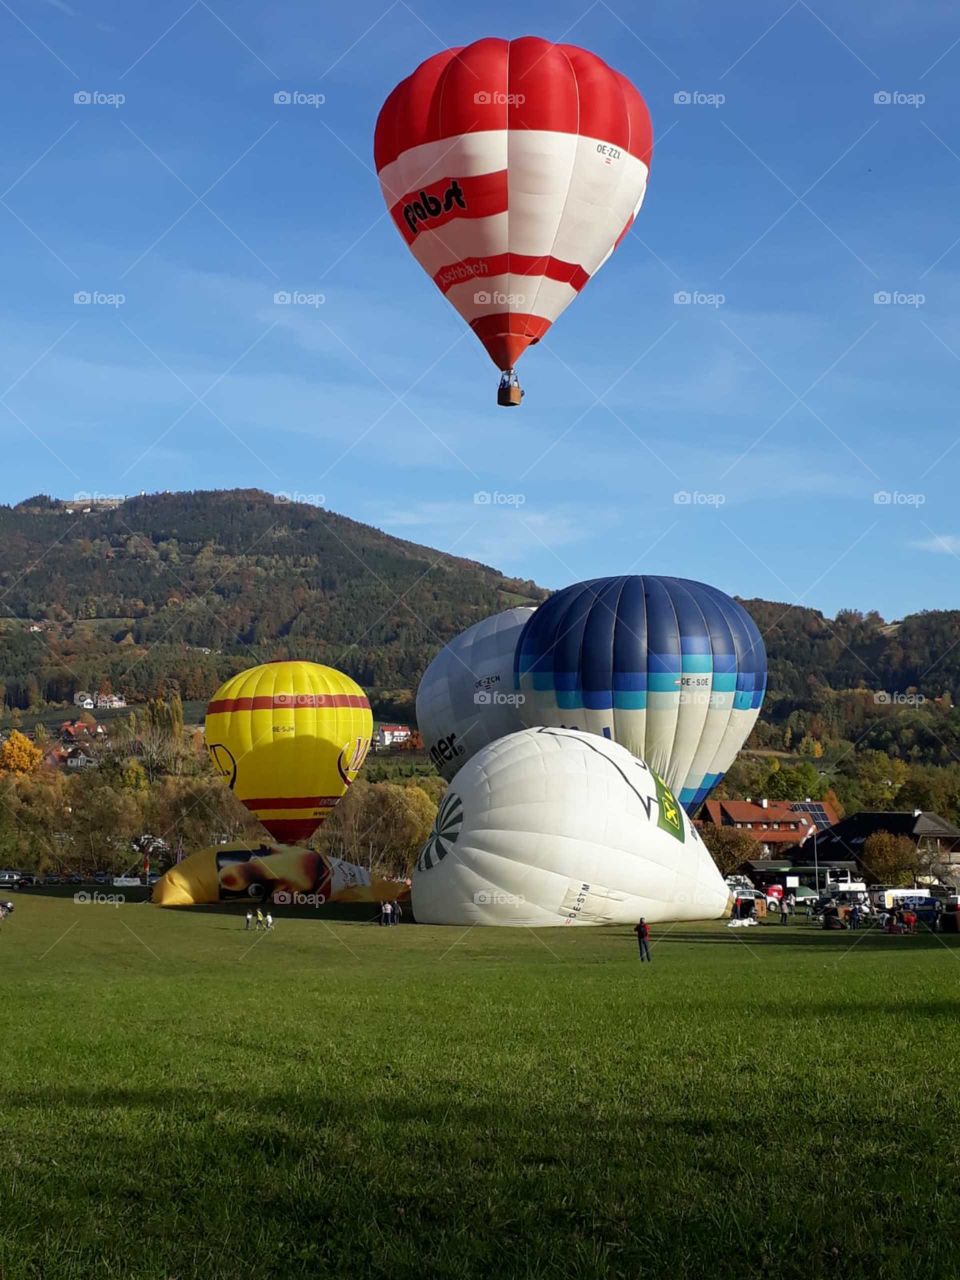 hot air balloons starting their voyage